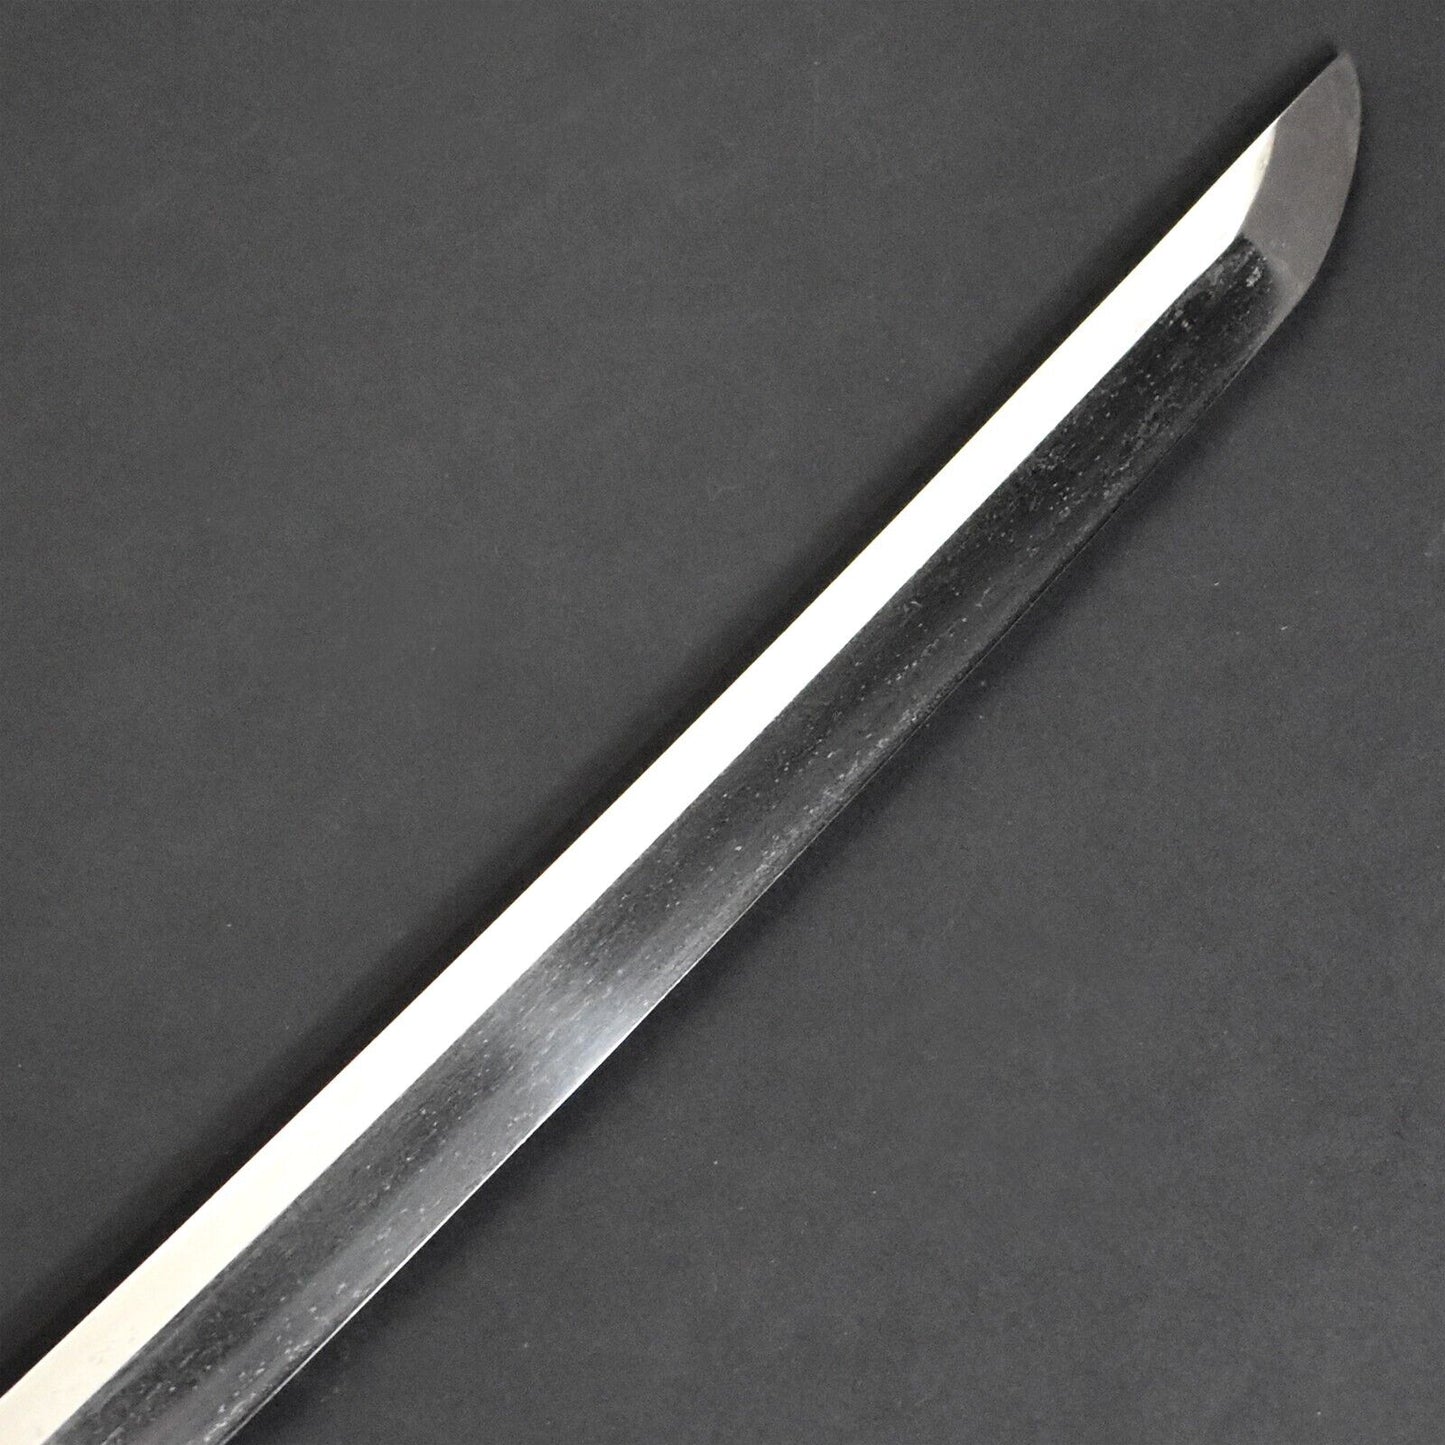 Old Muromachi Era Nihonto Katana Signed Blade Long Sword Samurai Weapon Collectible Japanese.